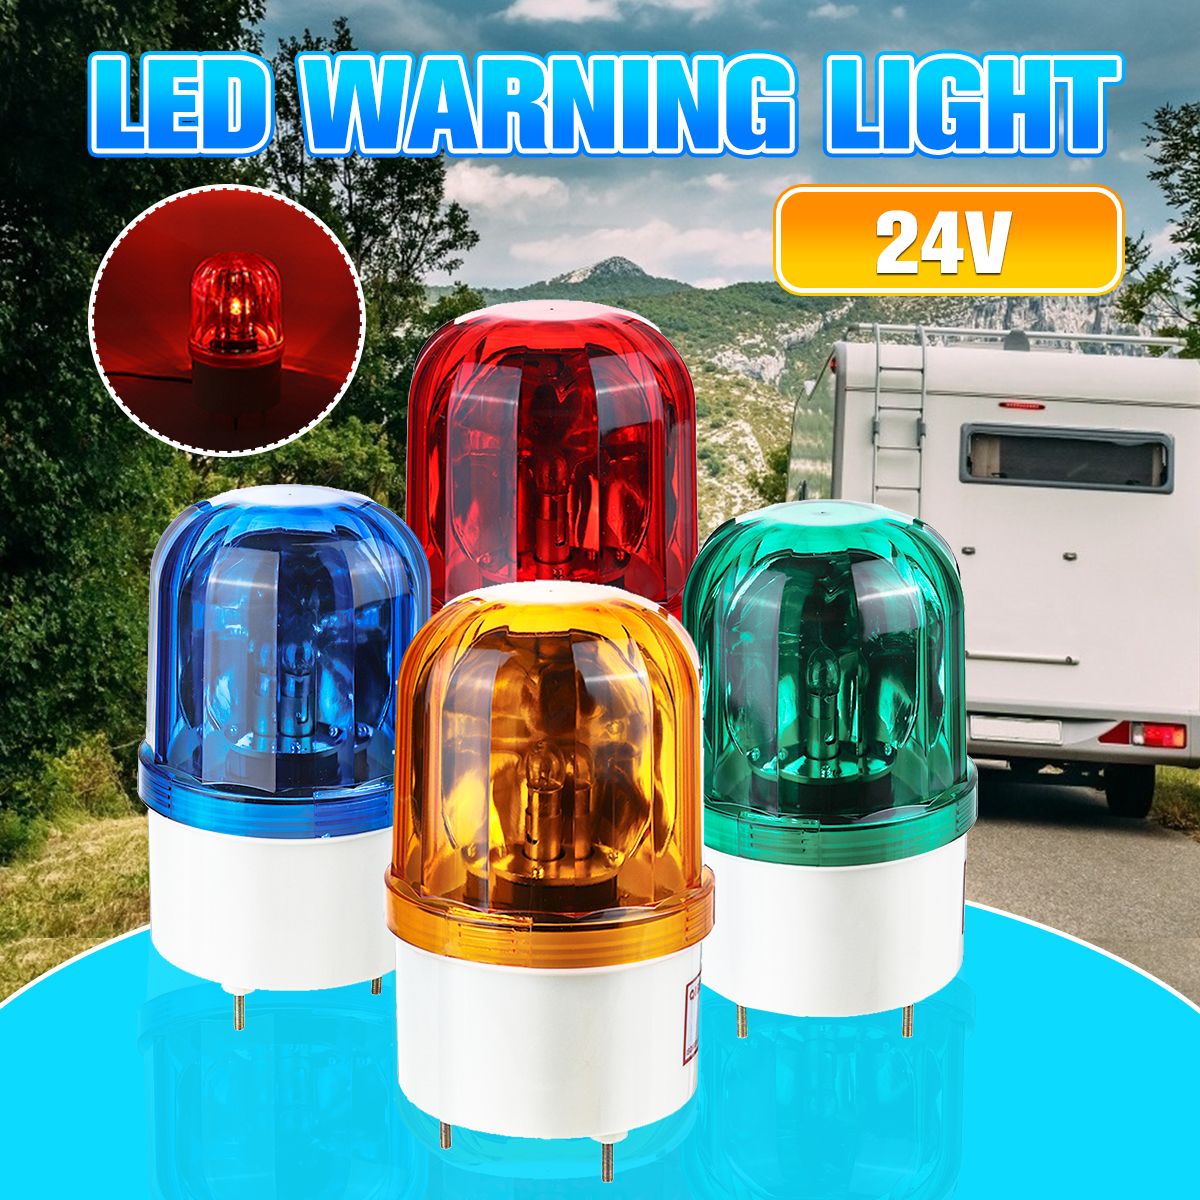 24V-Road-Traffic-Warning-Light-Beacon-LED-Emergency-Flashing-Recover-Safety-1766636